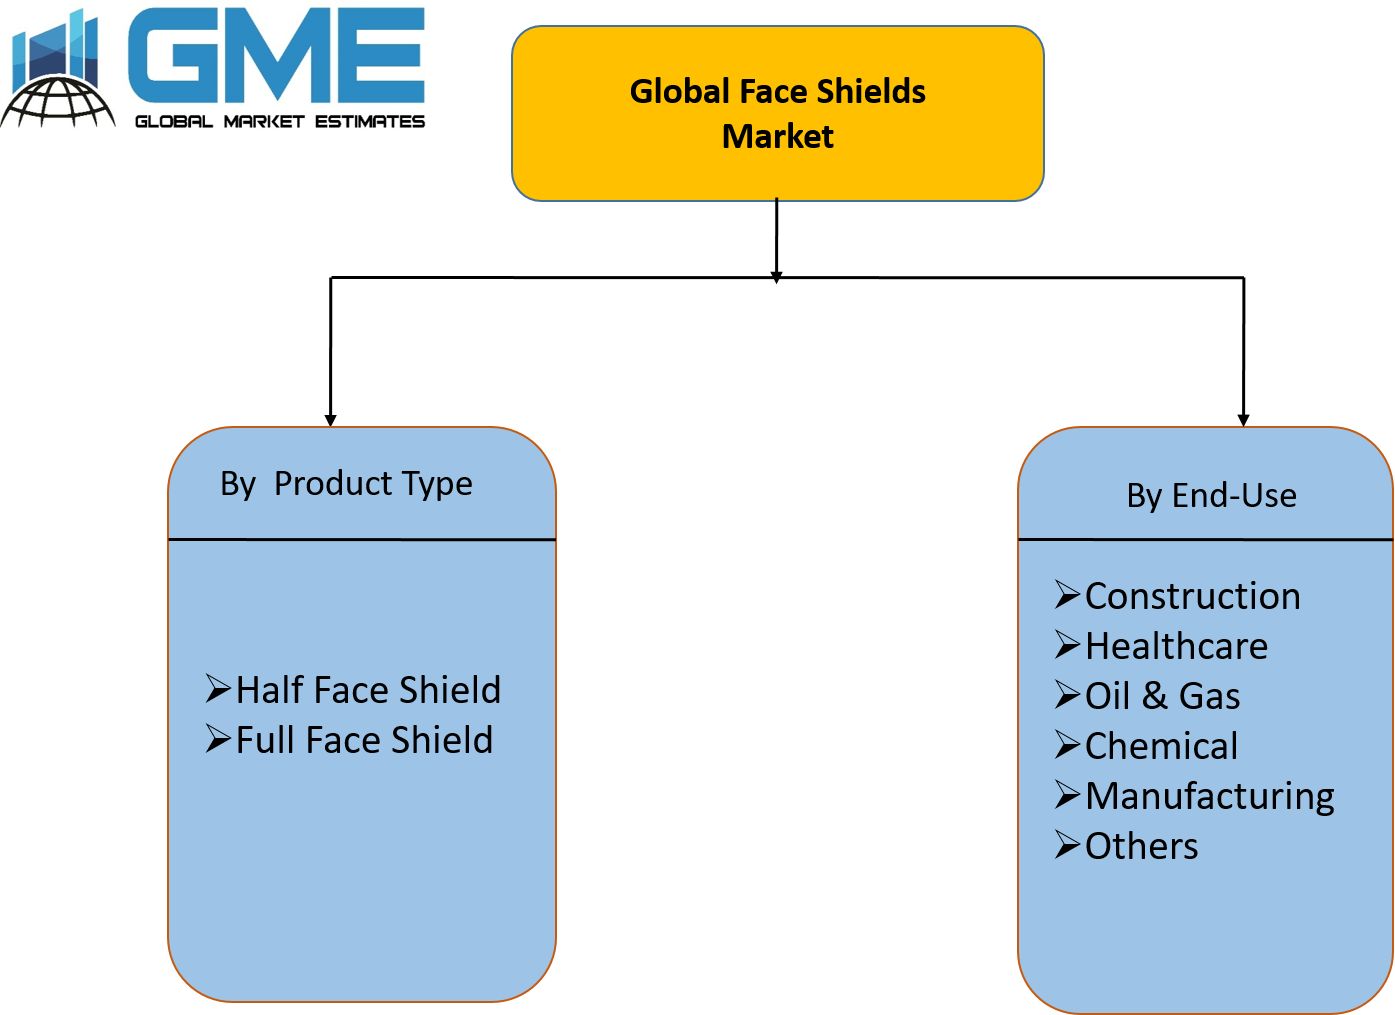 Global Face Shields Market Segmentation